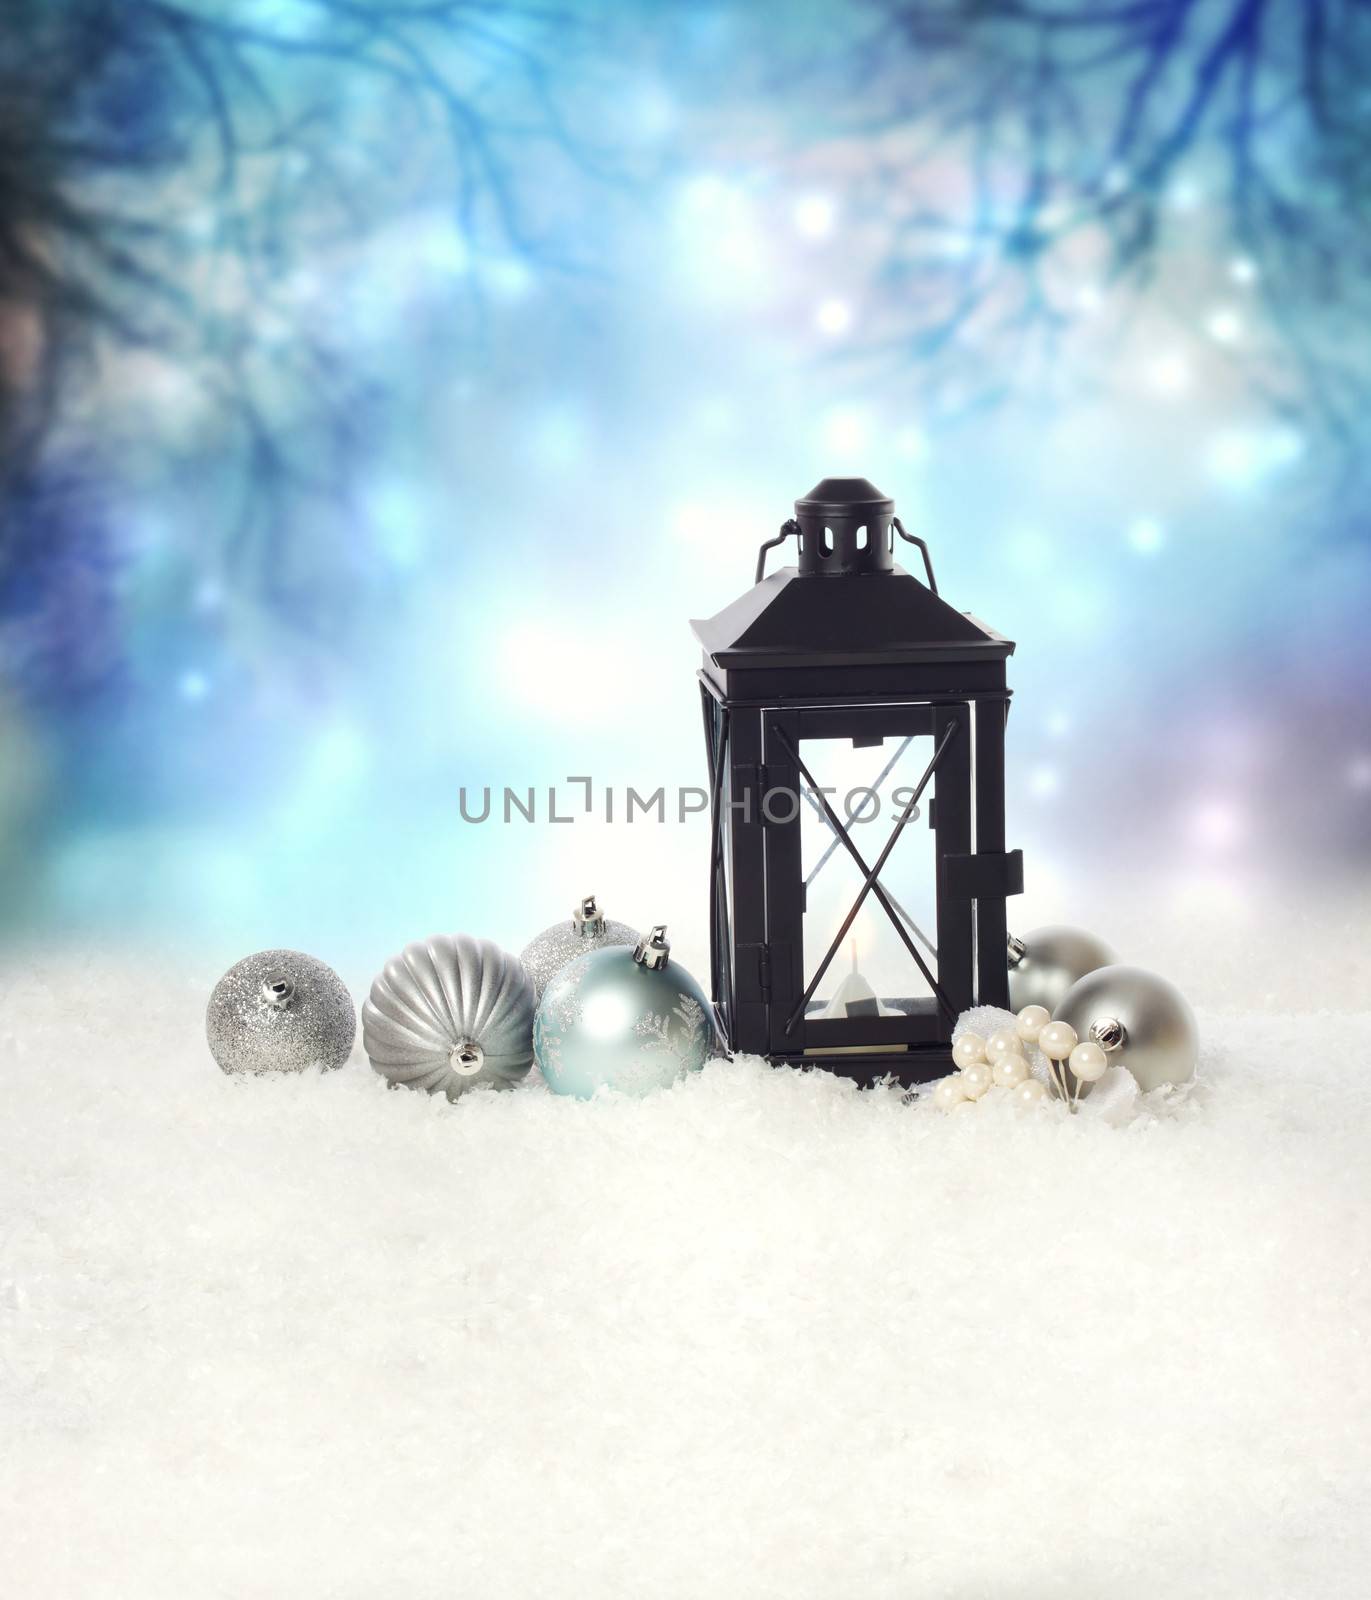 Christmas lantern with ornaments  by melpomene